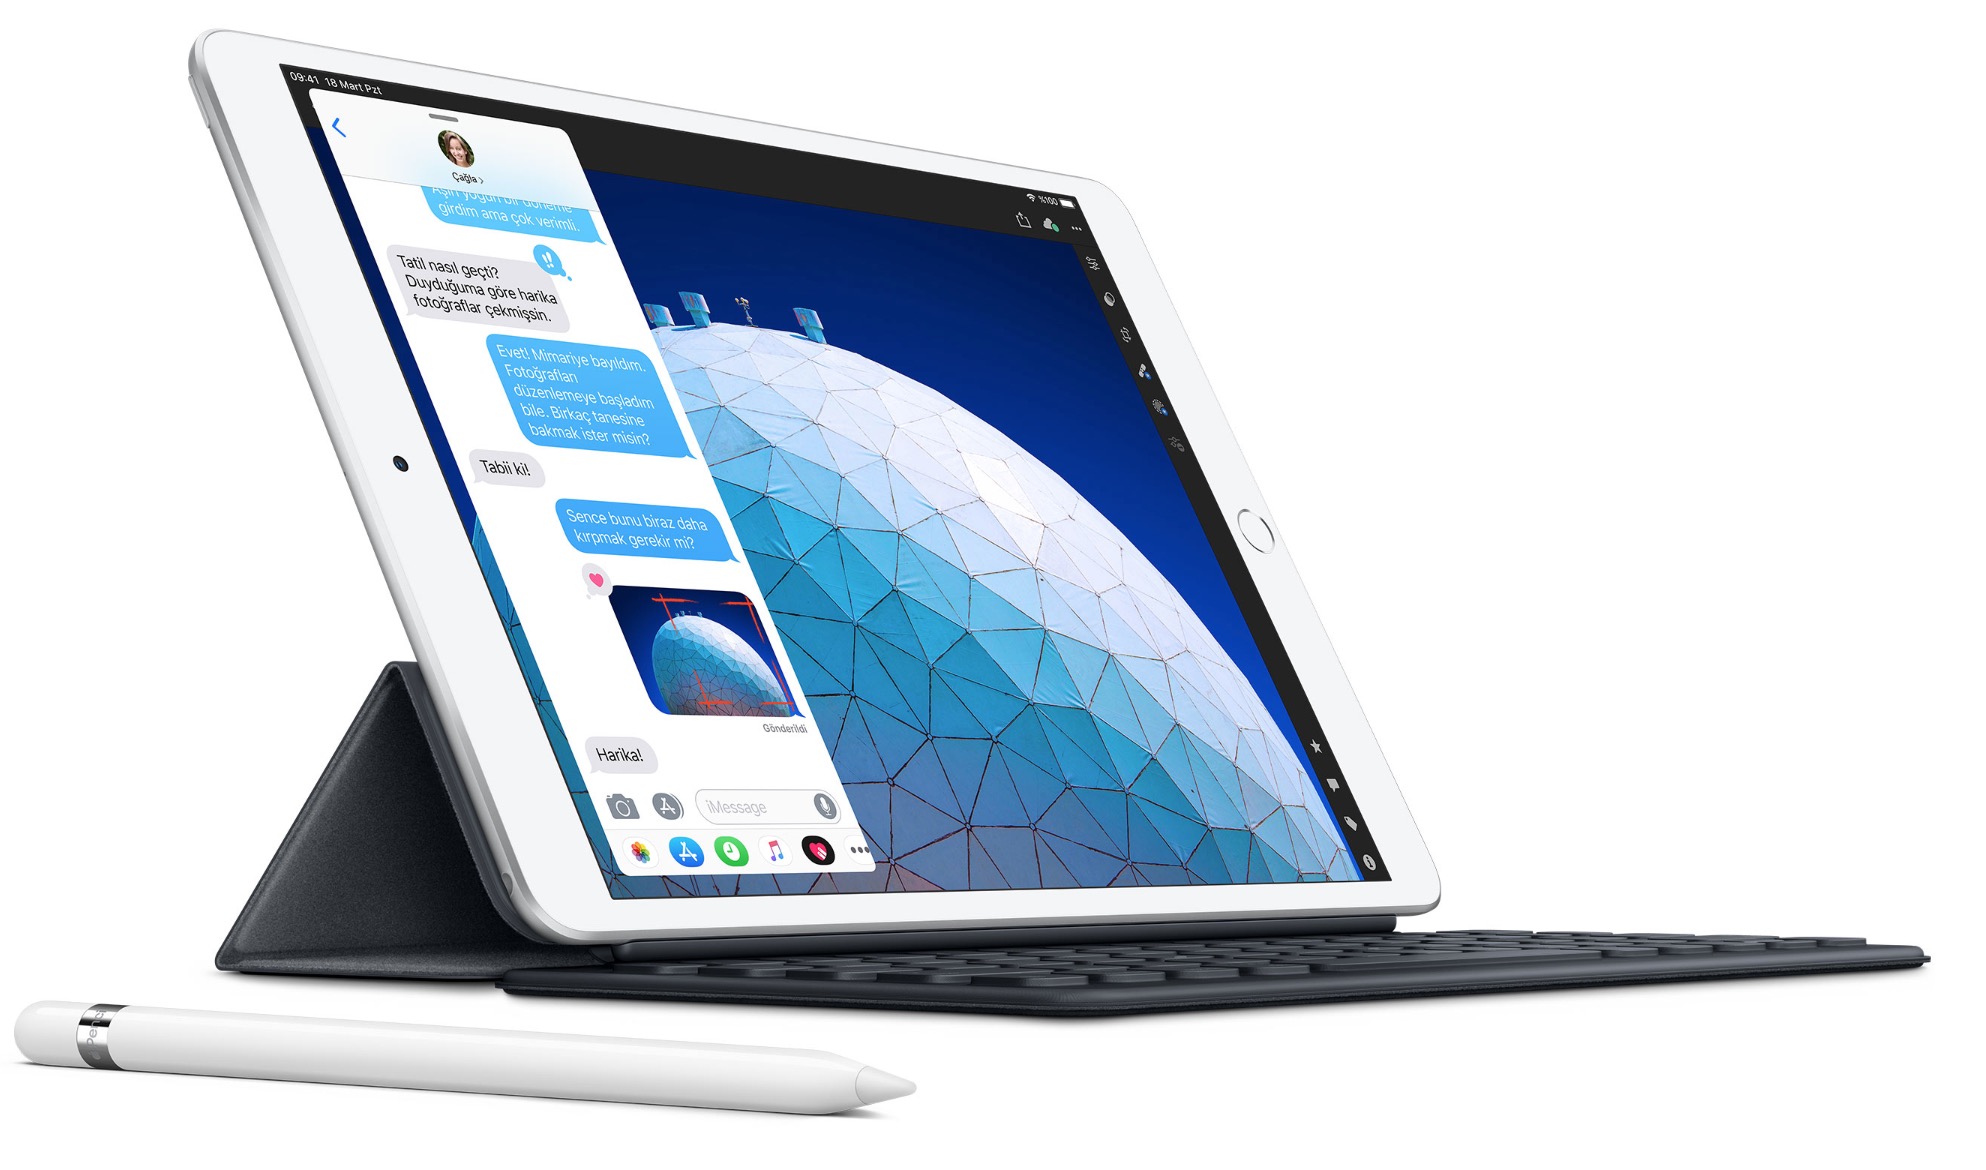 iPad Air 2019 Geekbench-en puntuek harrituta